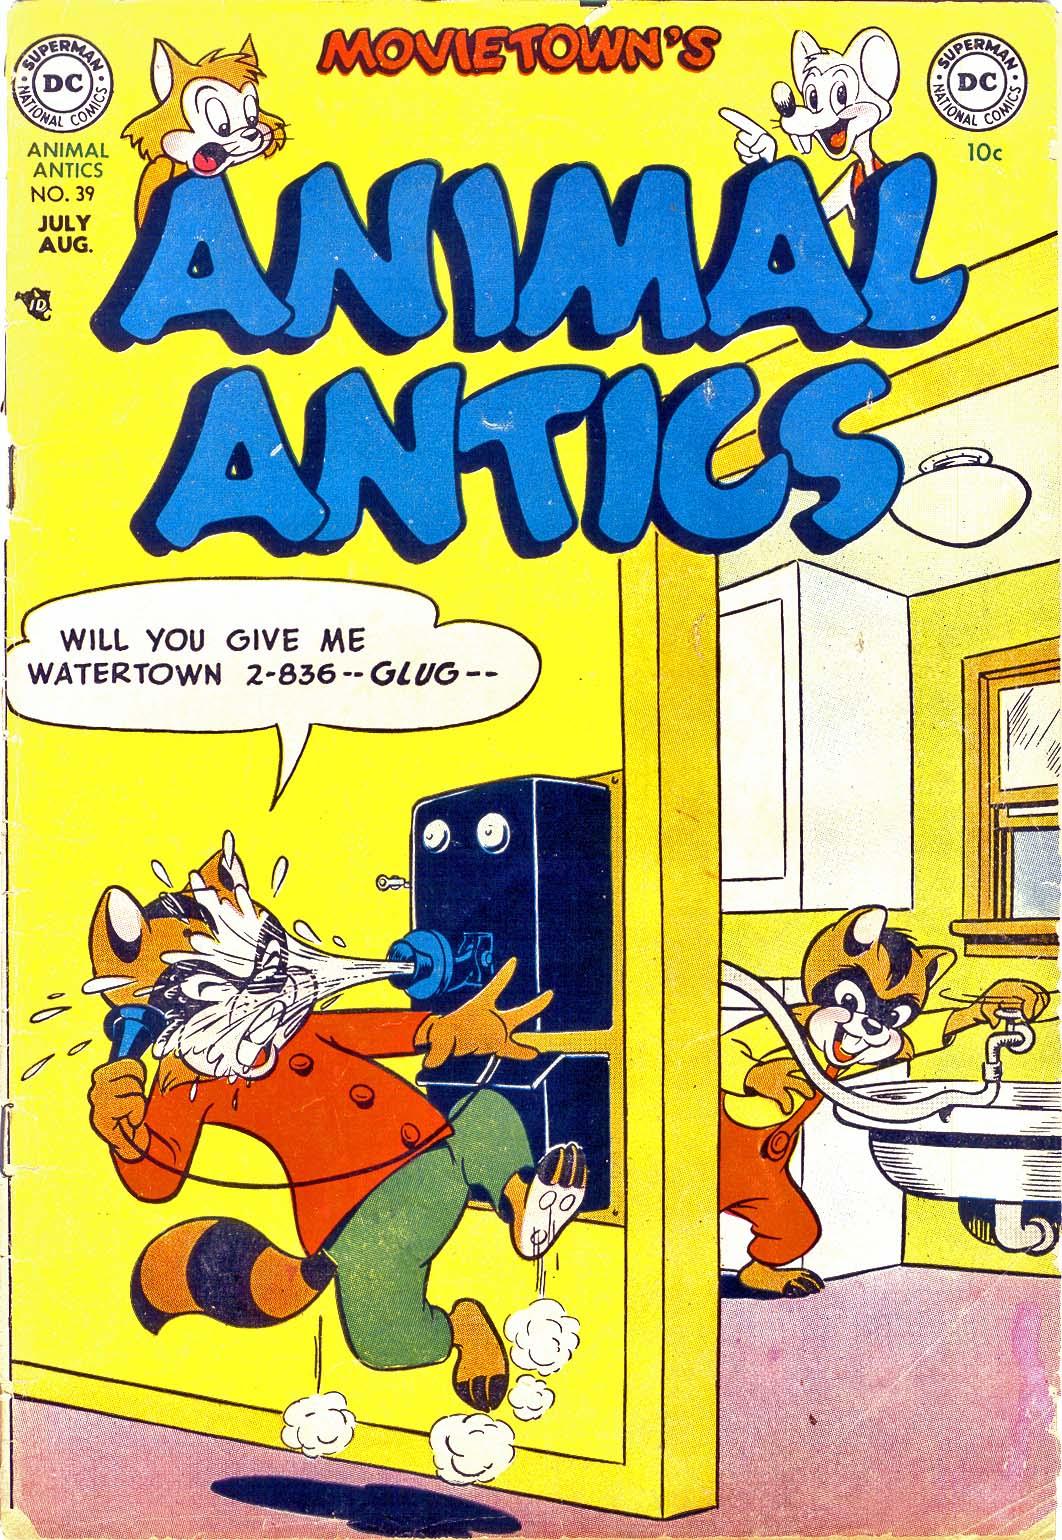 Movietown's Animal Antics Vol. 1 #39